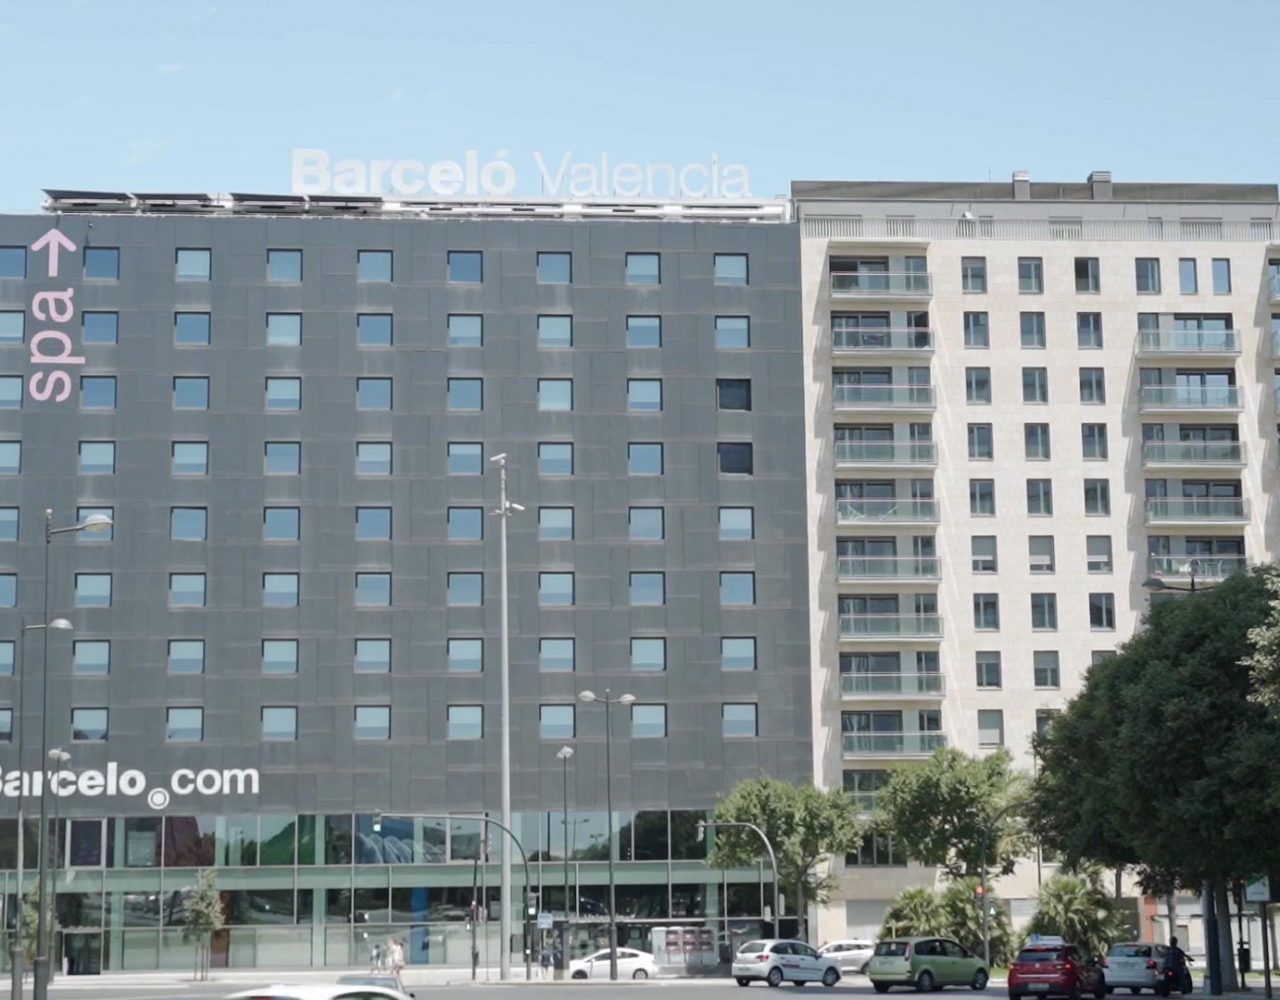 Vídeo testimonial Hotel Barceló Valencia. Rehabitable - Ventura Core